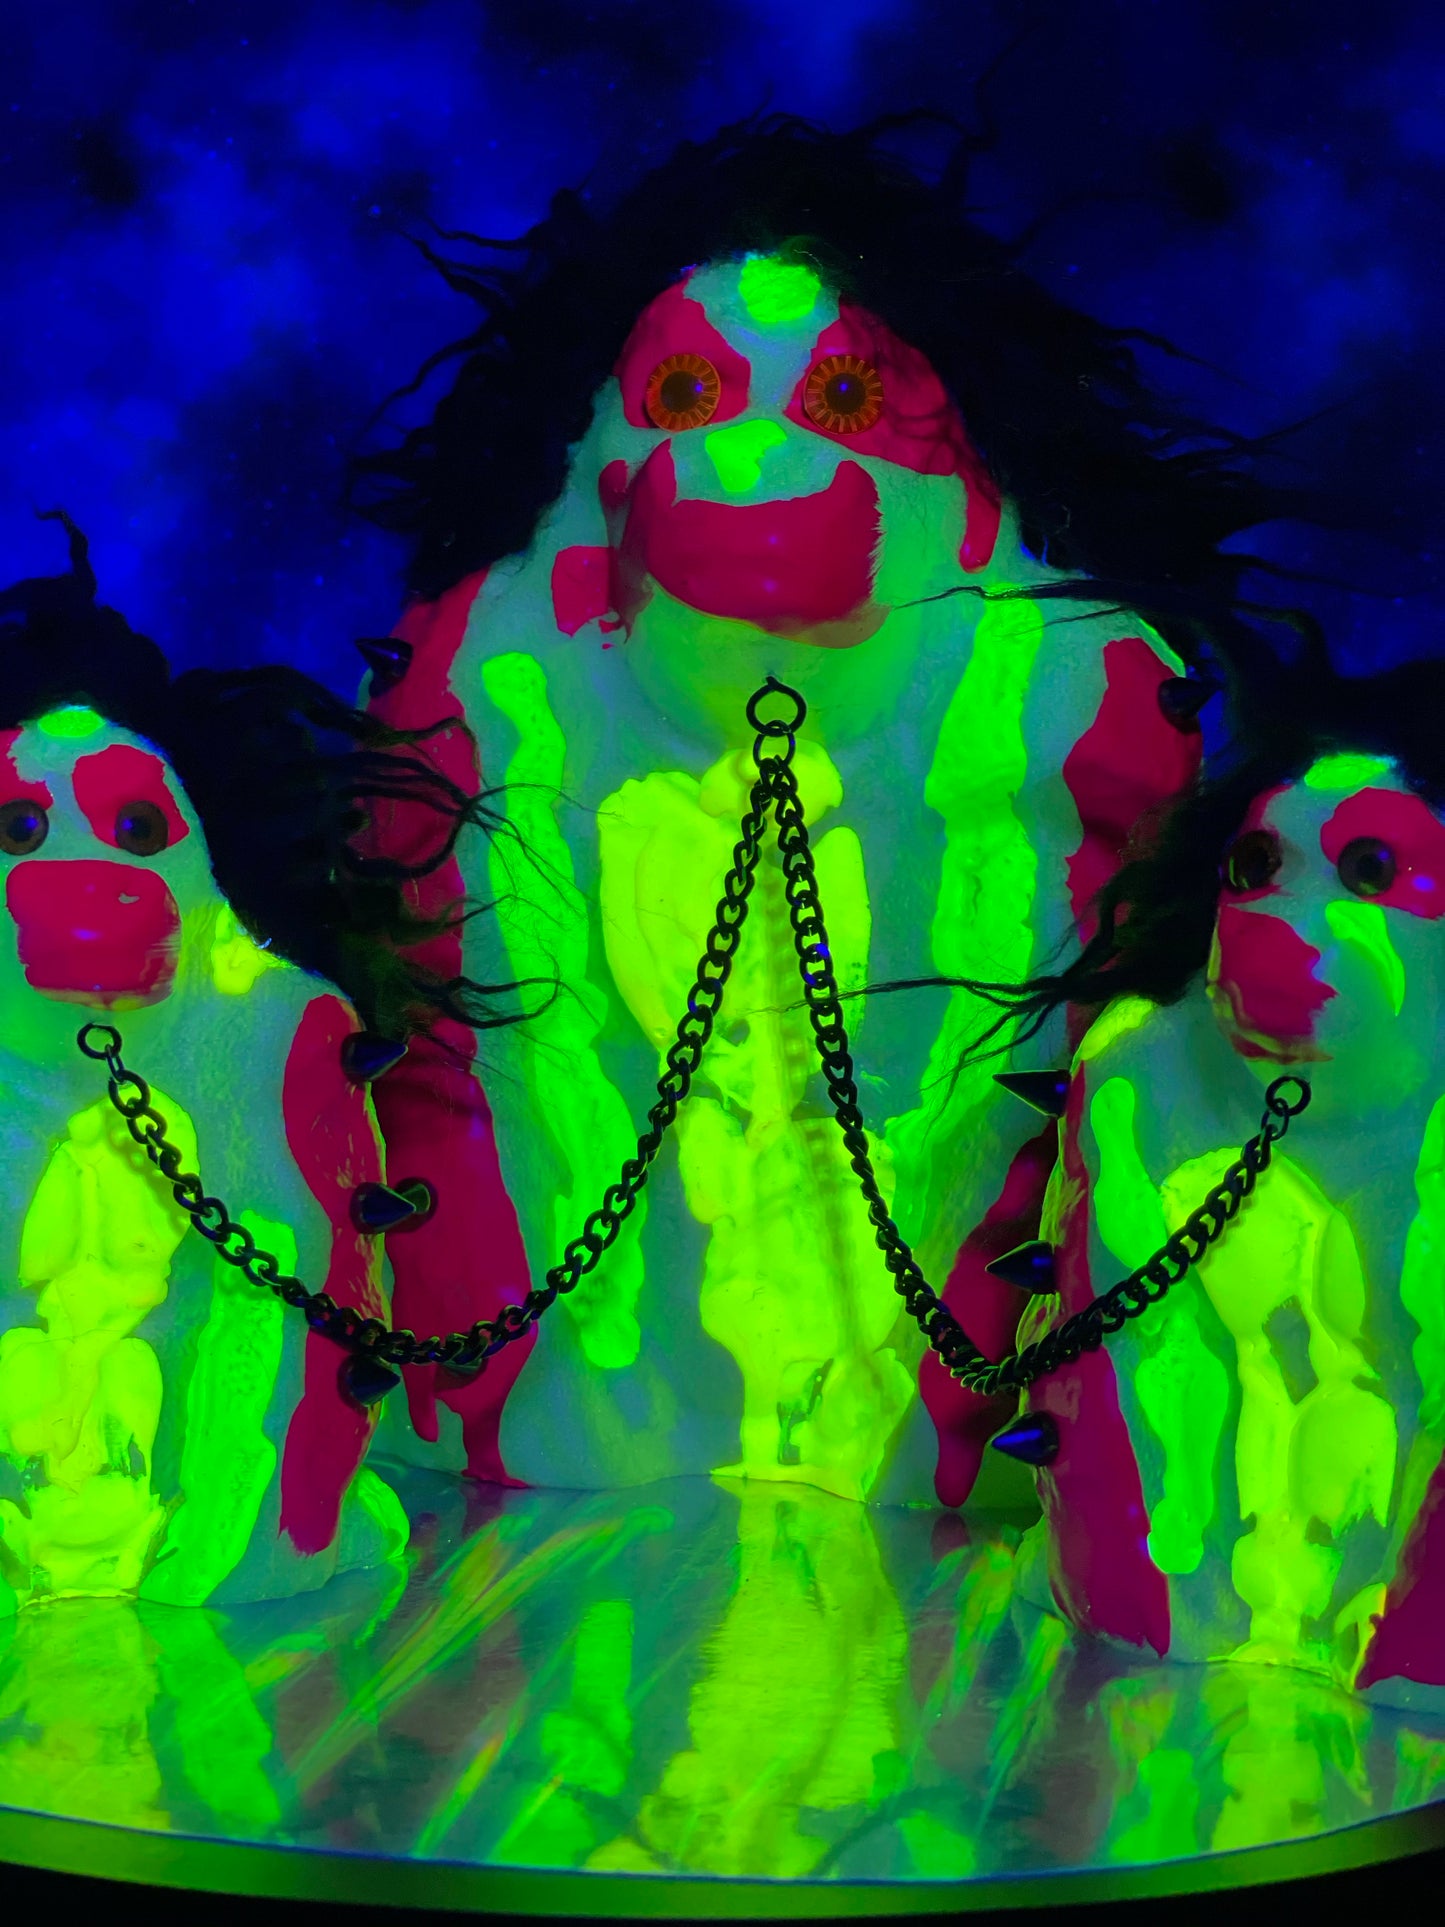 Gorilla Gang: The UV Reactive/Glow in the Dark Day